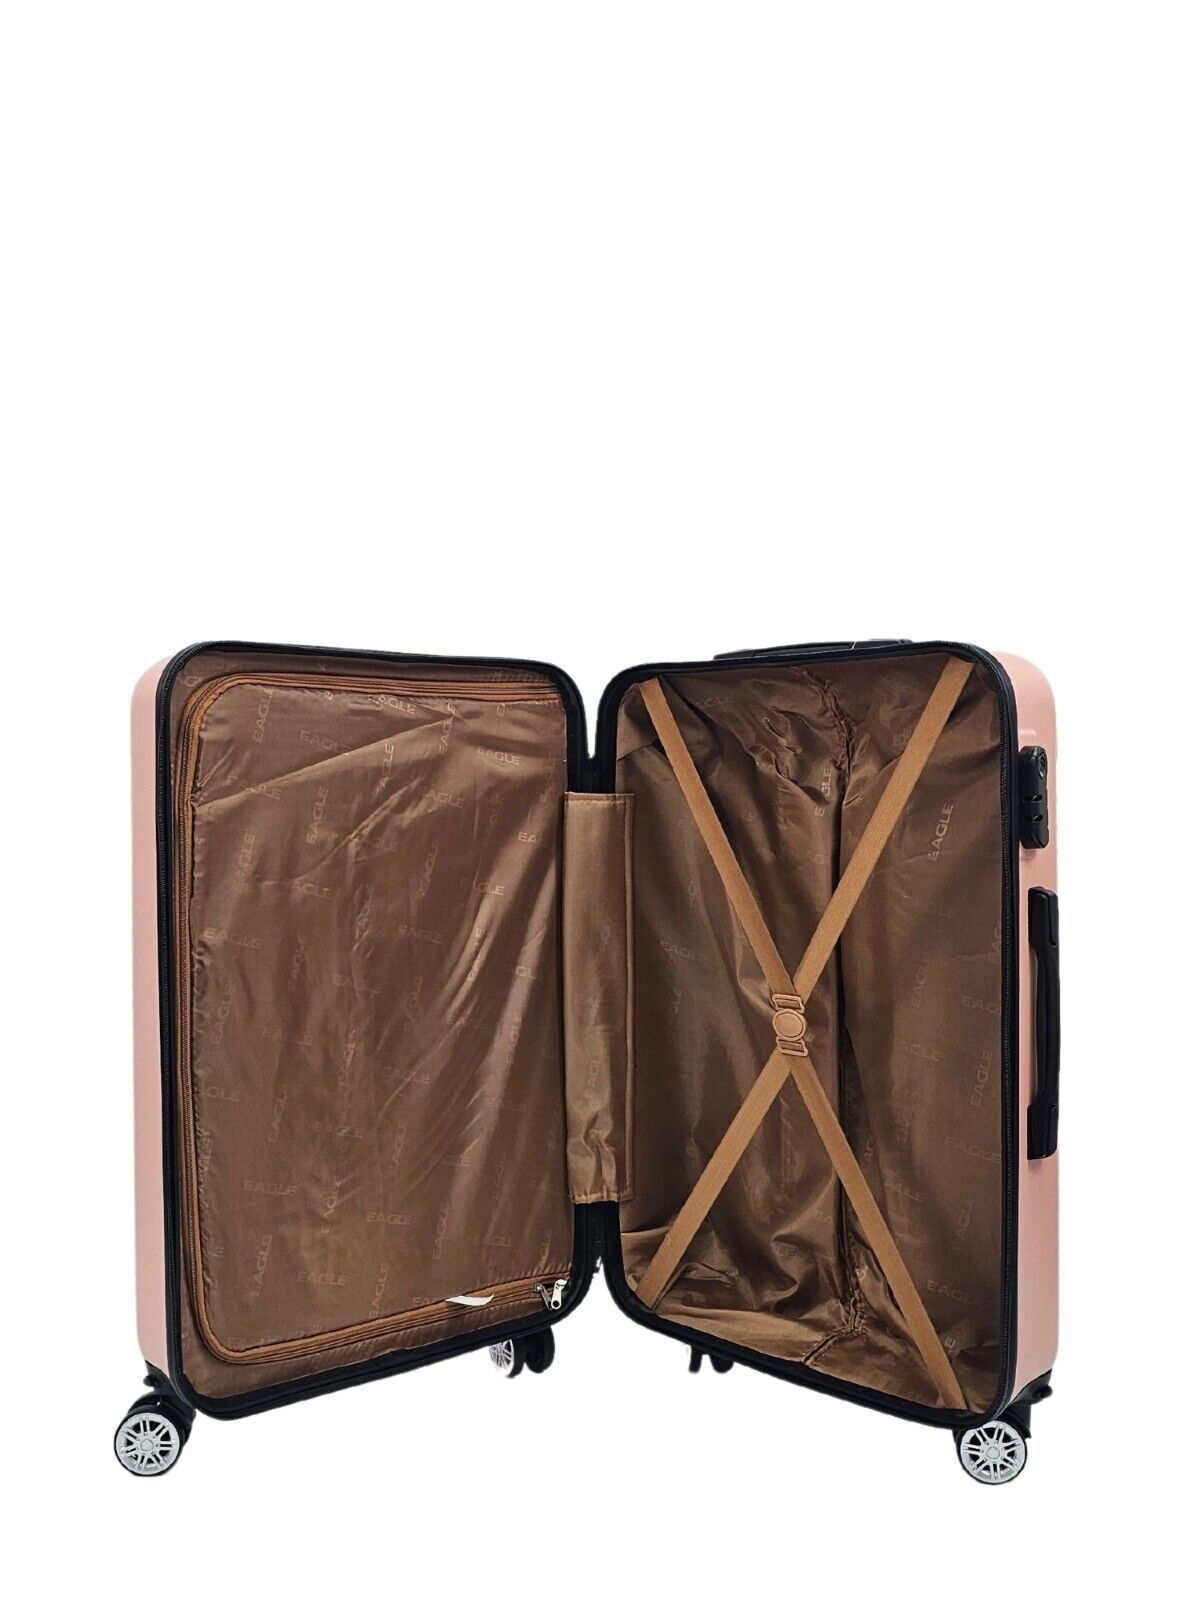 Hard Shell Rose Gold Cabin Suitcase Set 8 Wheel Luggage Case Travel Bag